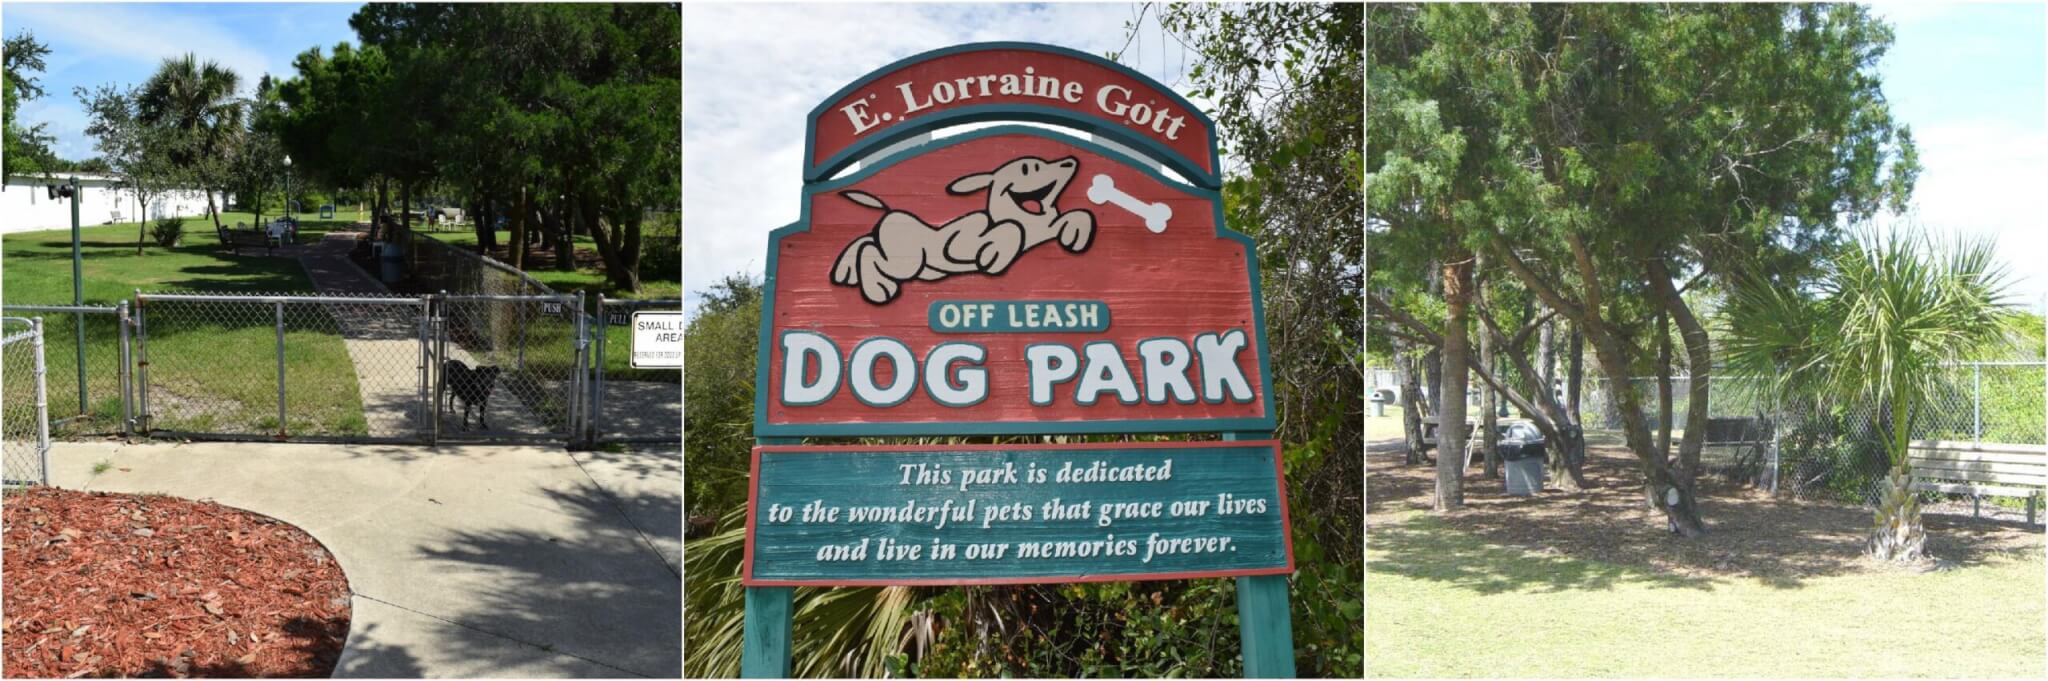 E. Lorraine Gott Dog Park.